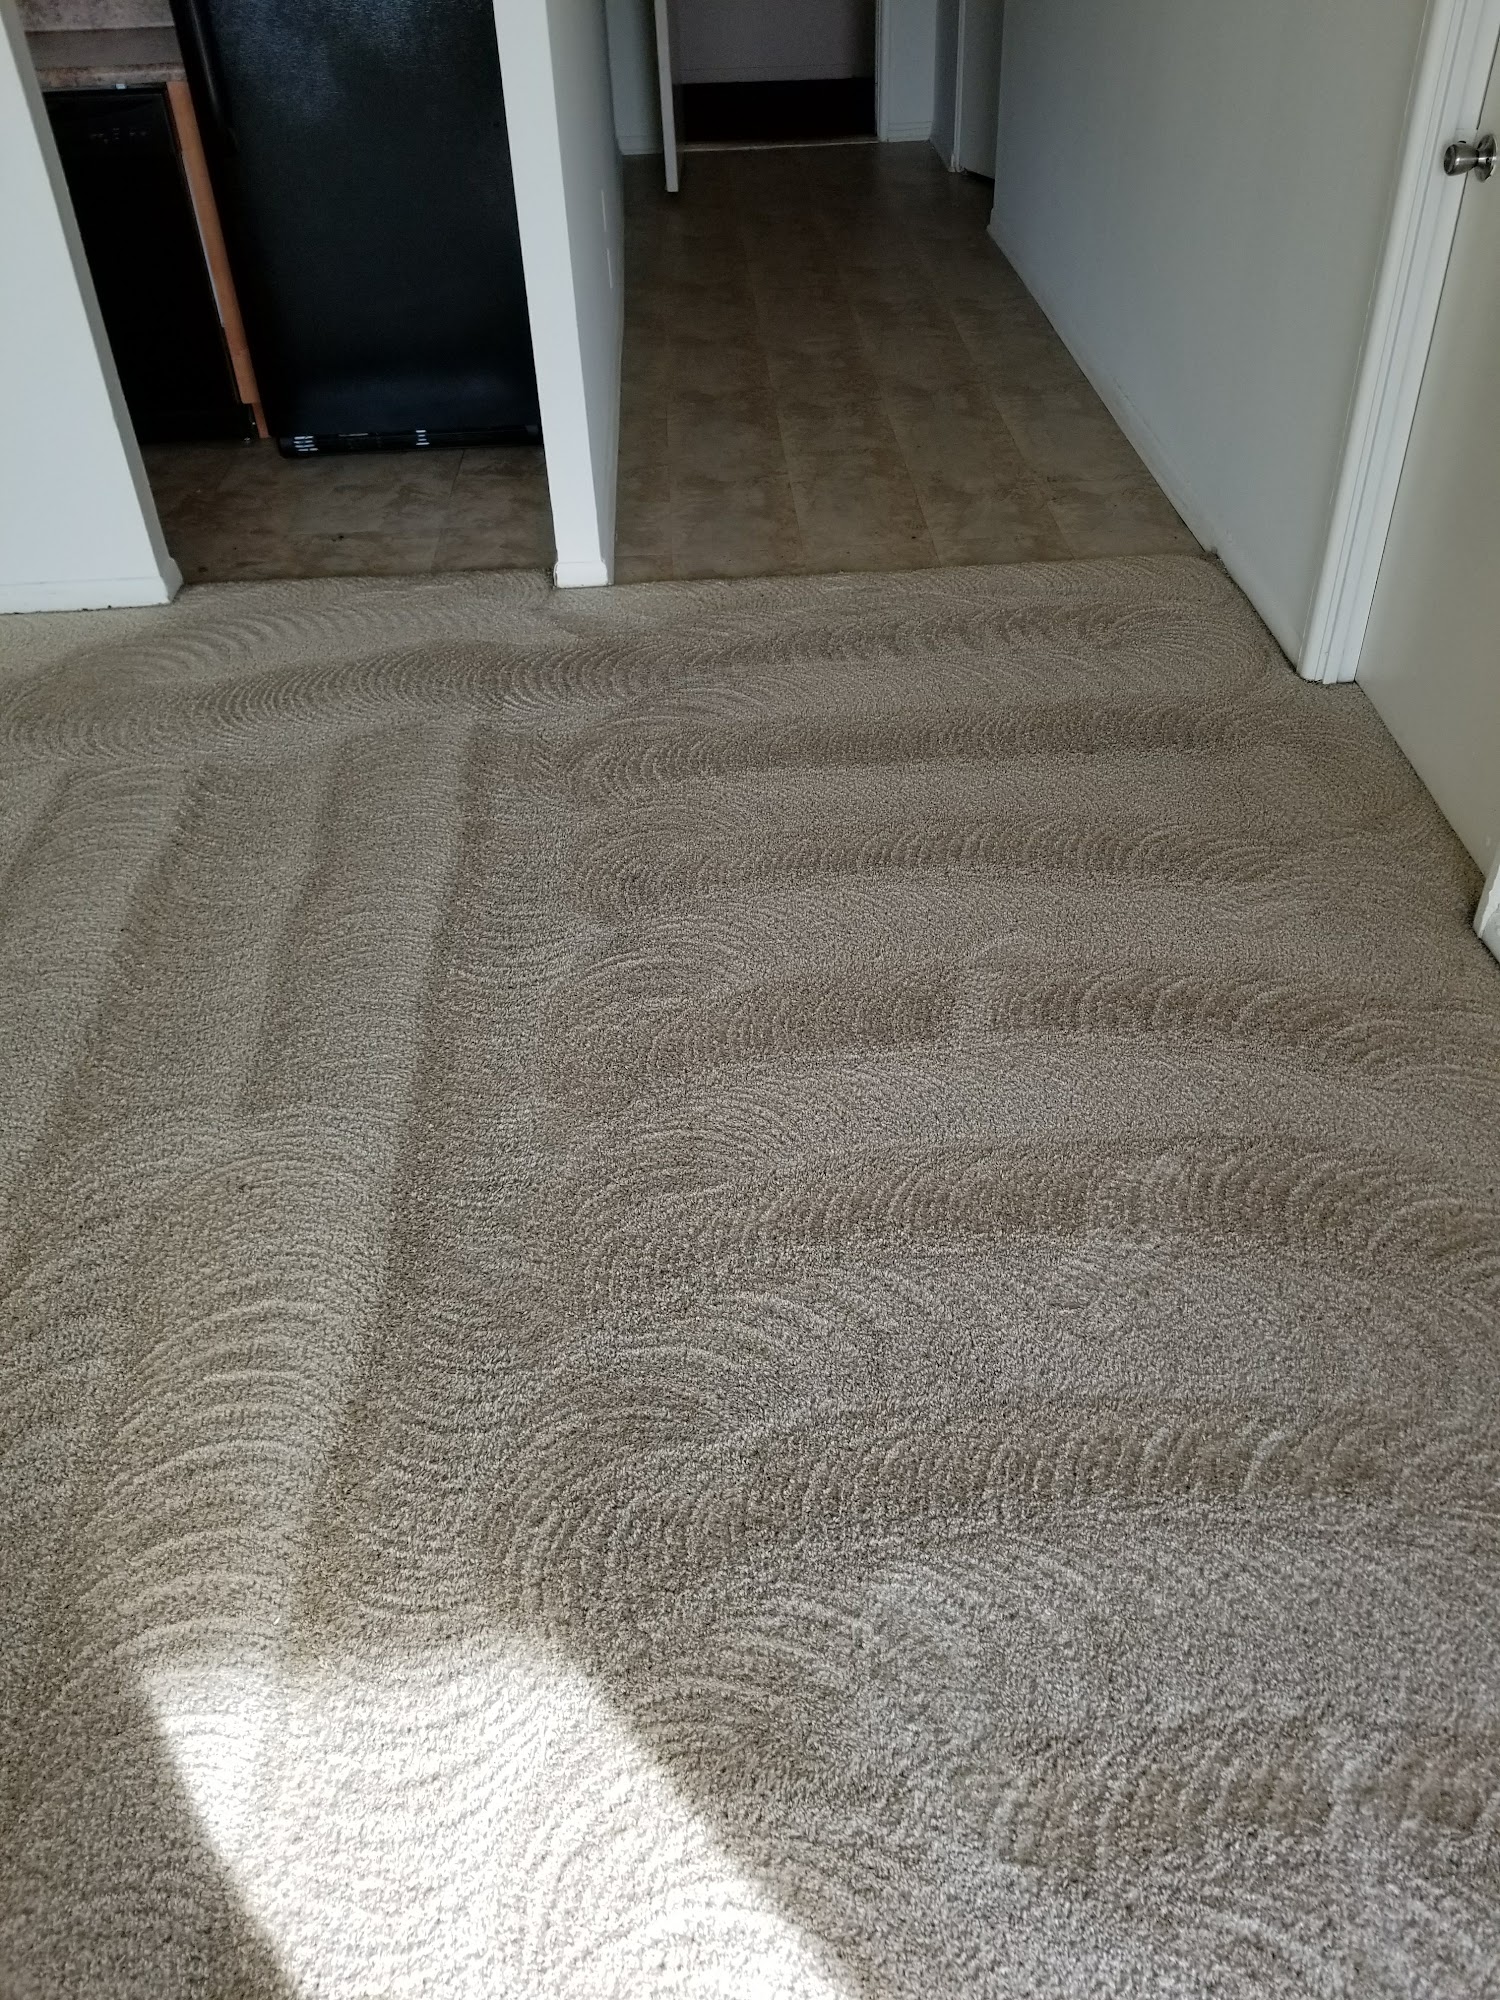 Infinite Carpet Cleaning